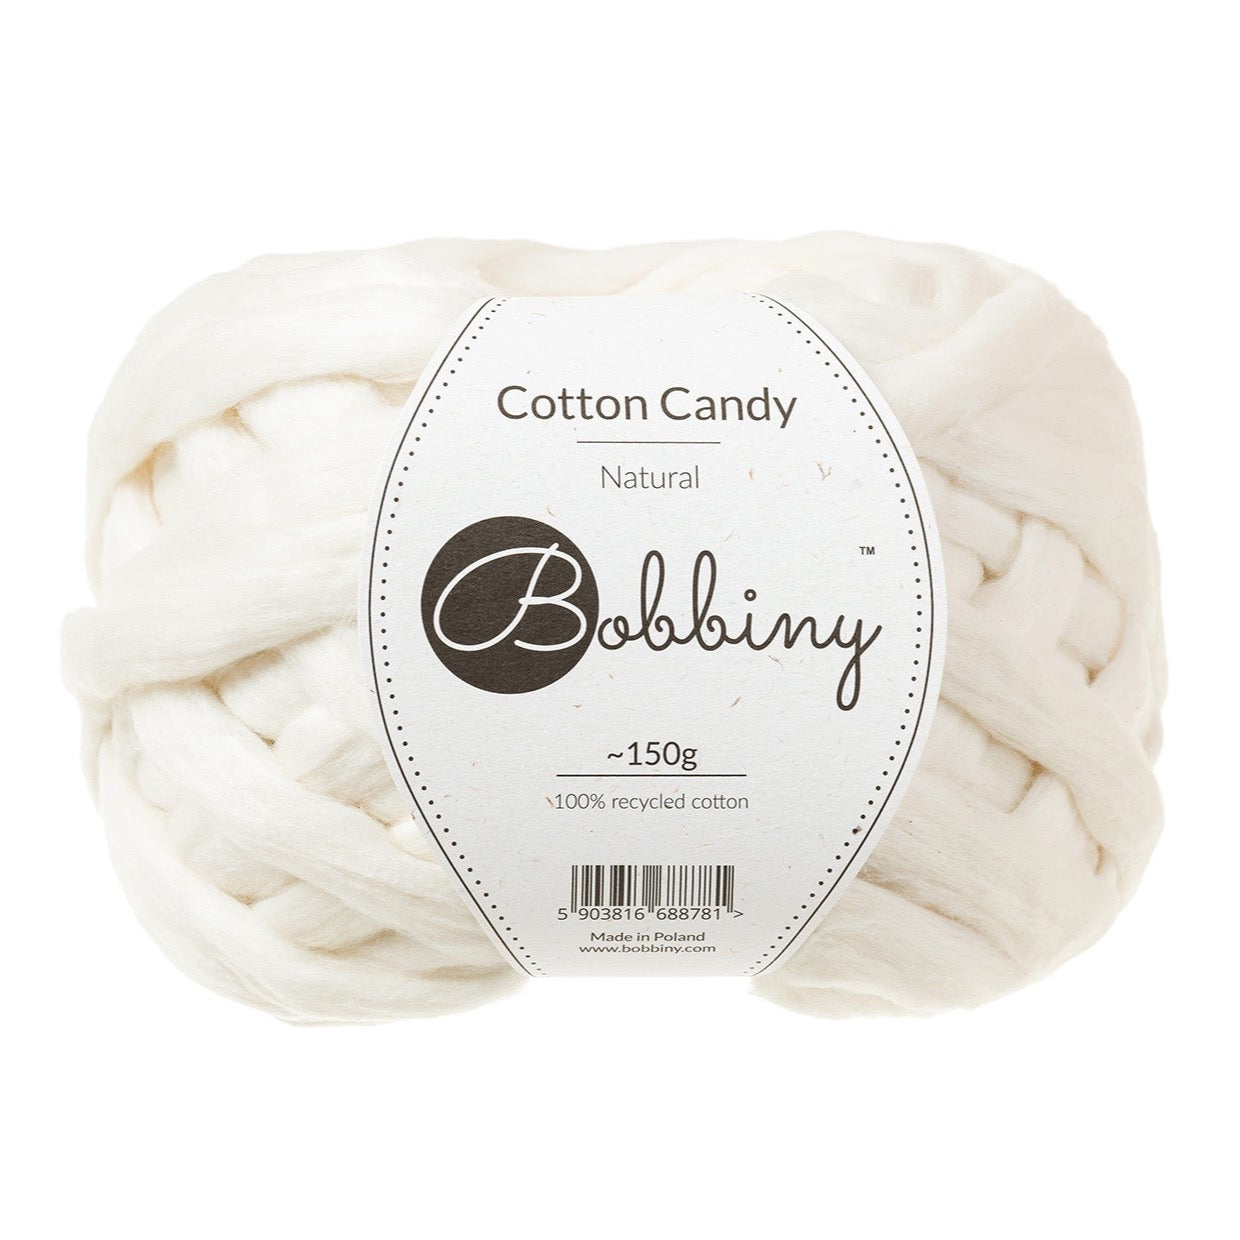 Natural shade 100% cotton candy weaving cotton